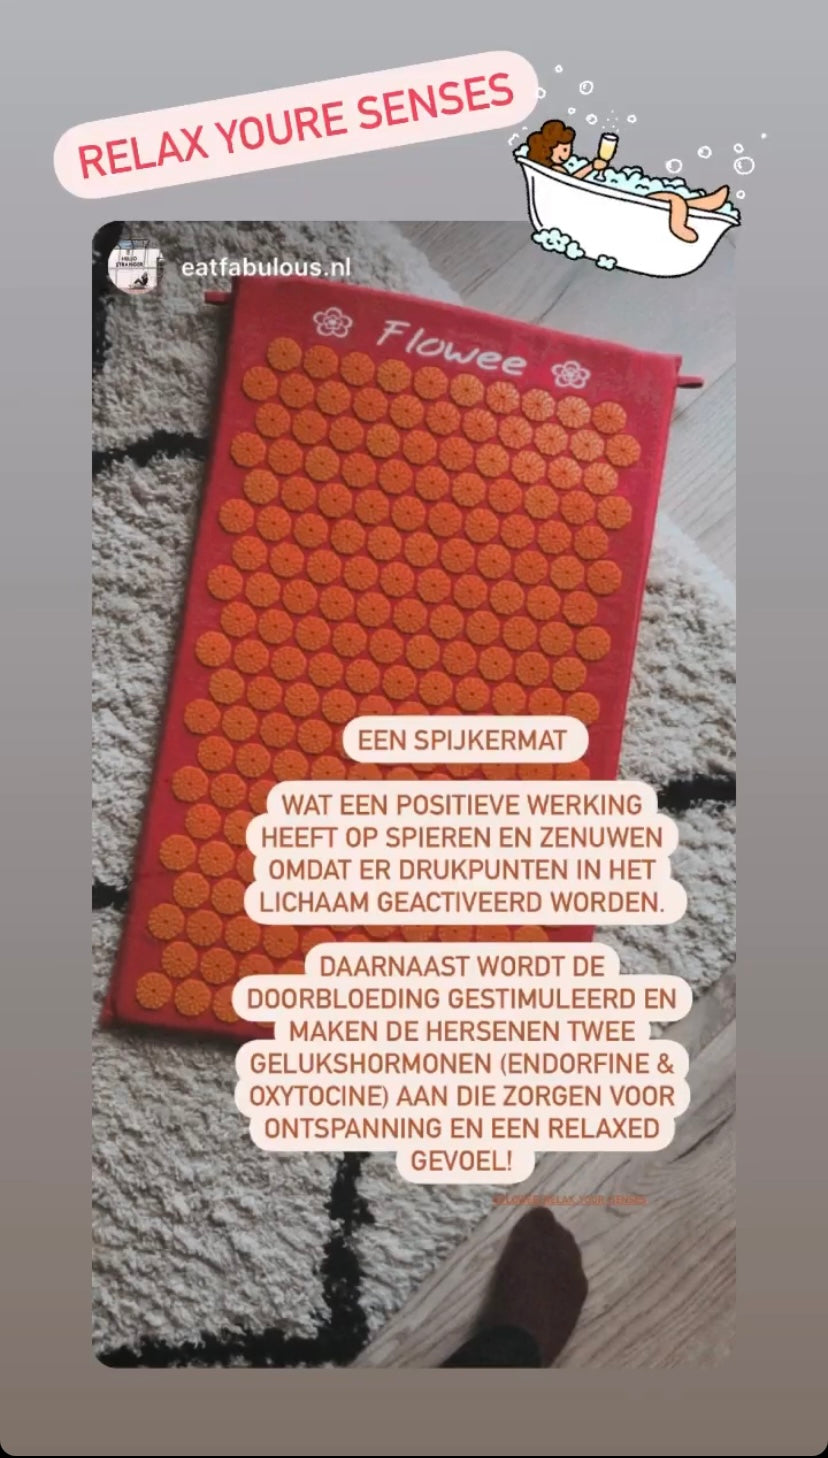 Instagram post van eatfabulous.nl ervaring Flowee spijkermat